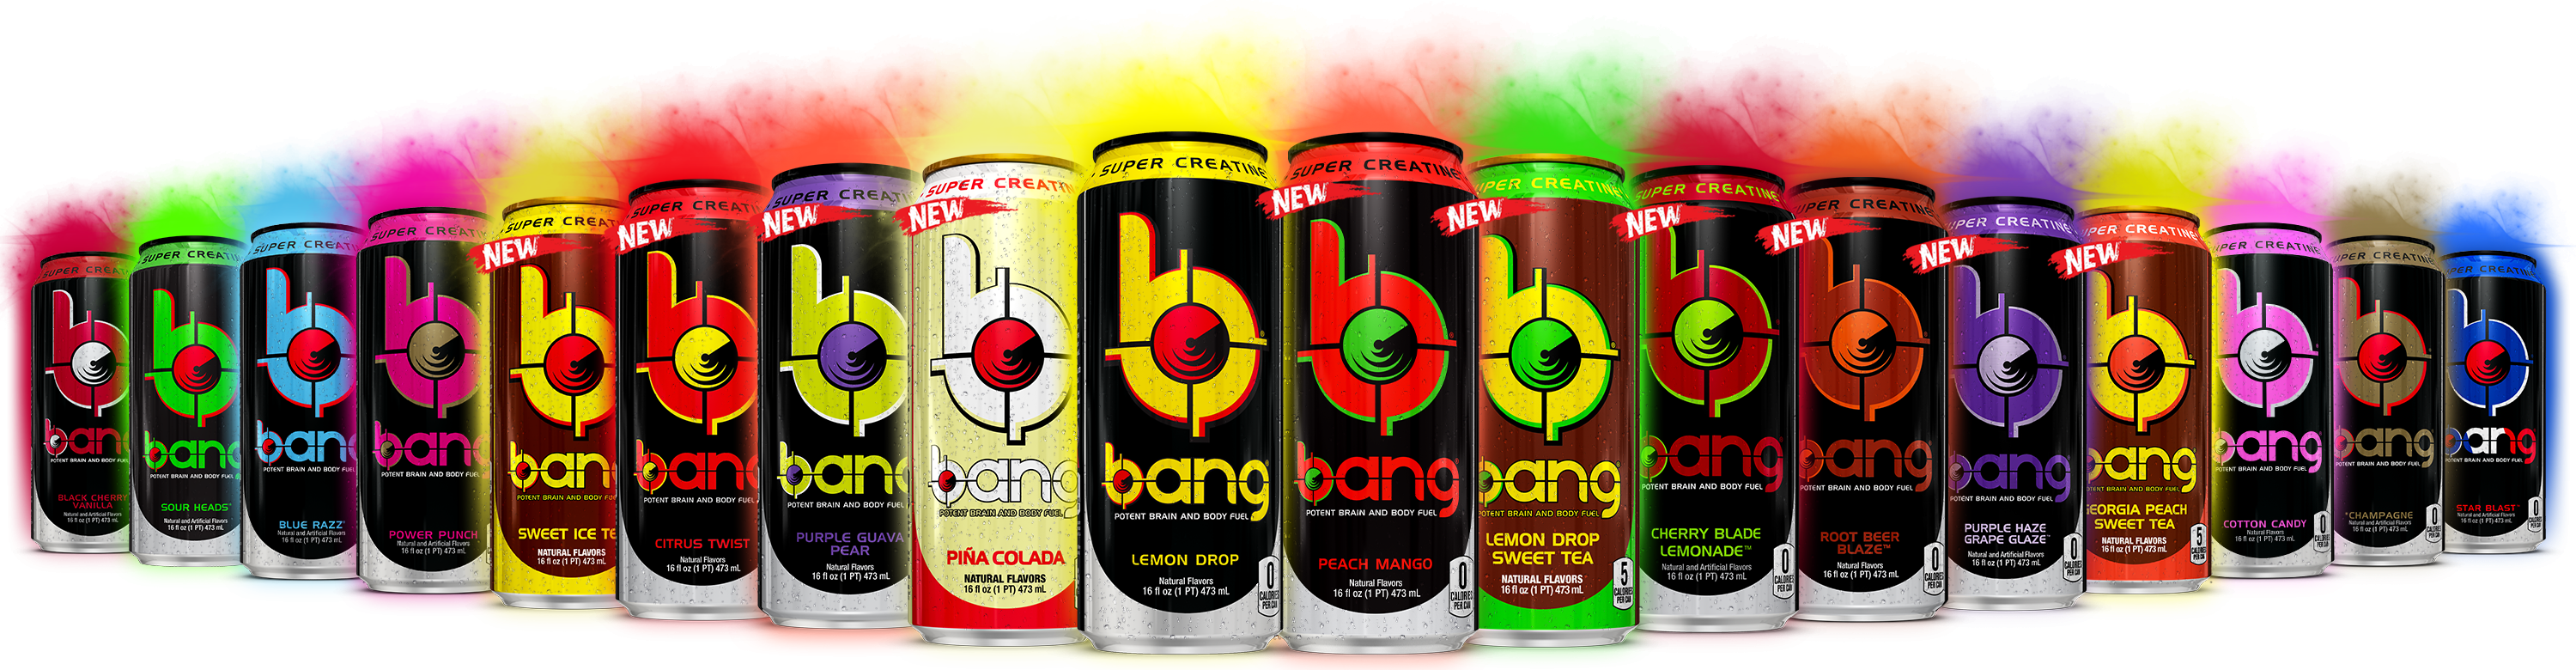 Bang landing vpx sports. Energy clipart energy drink